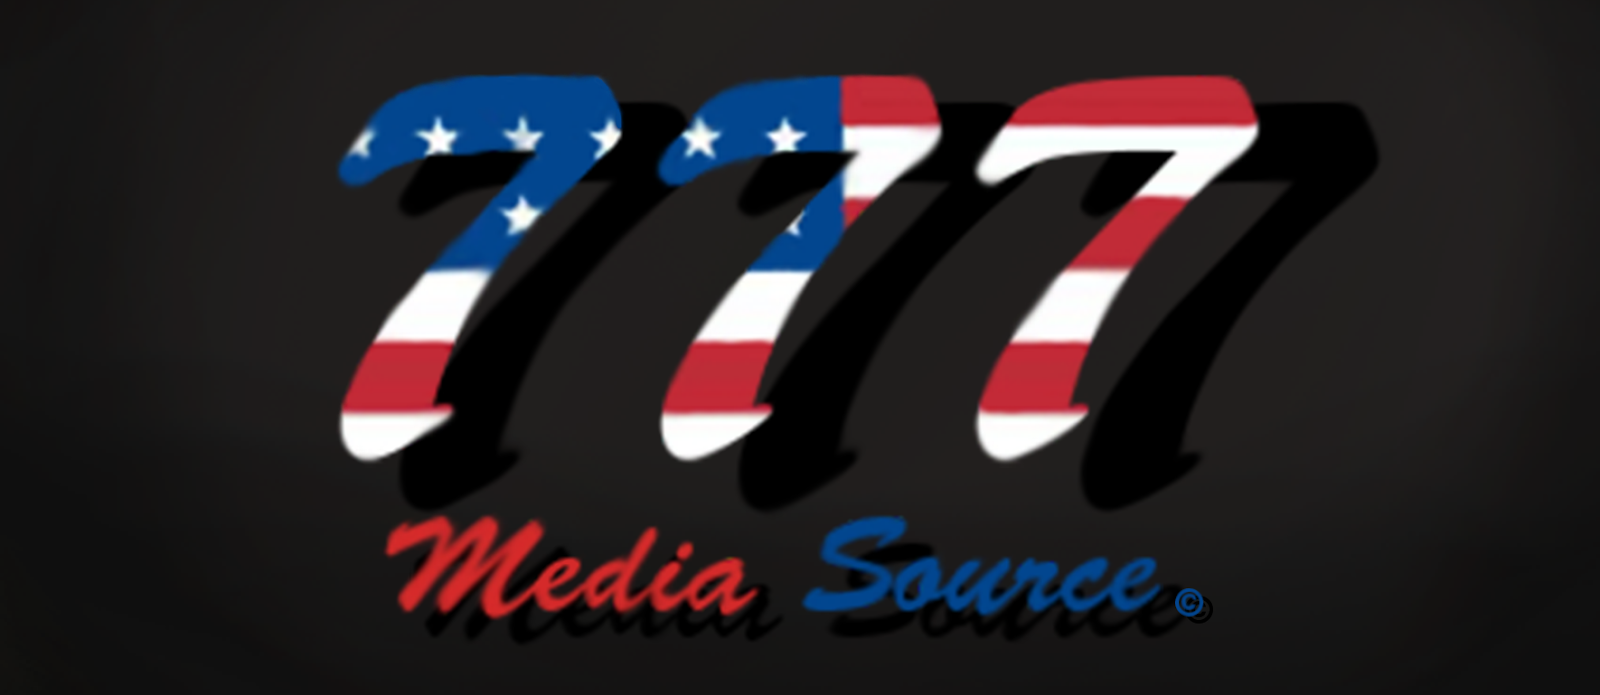 777 Media Source